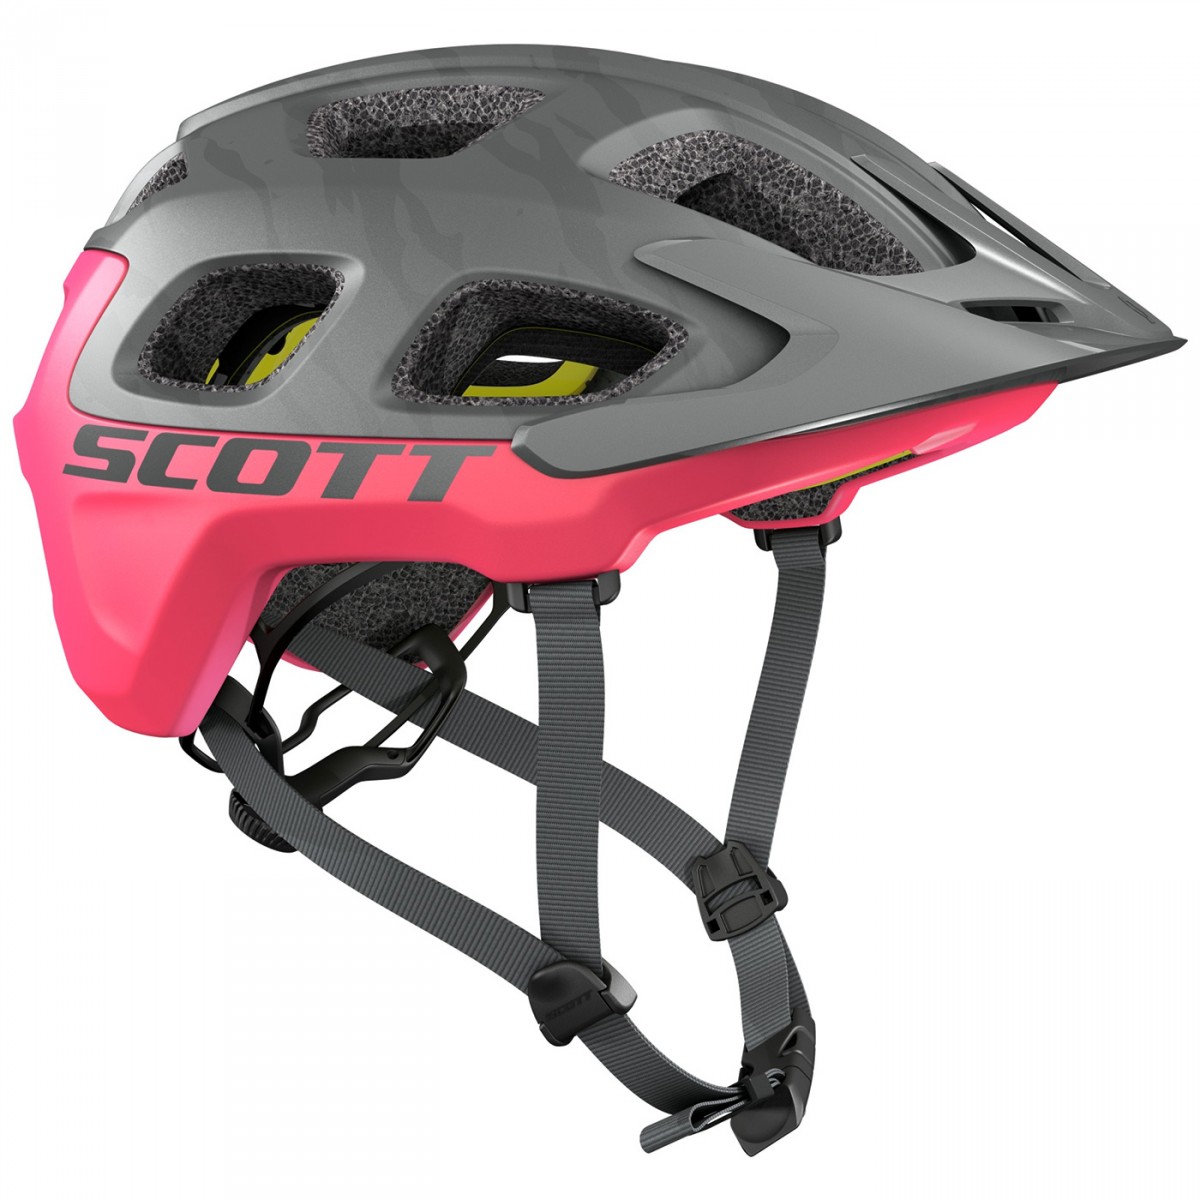 Scott cycling helmet